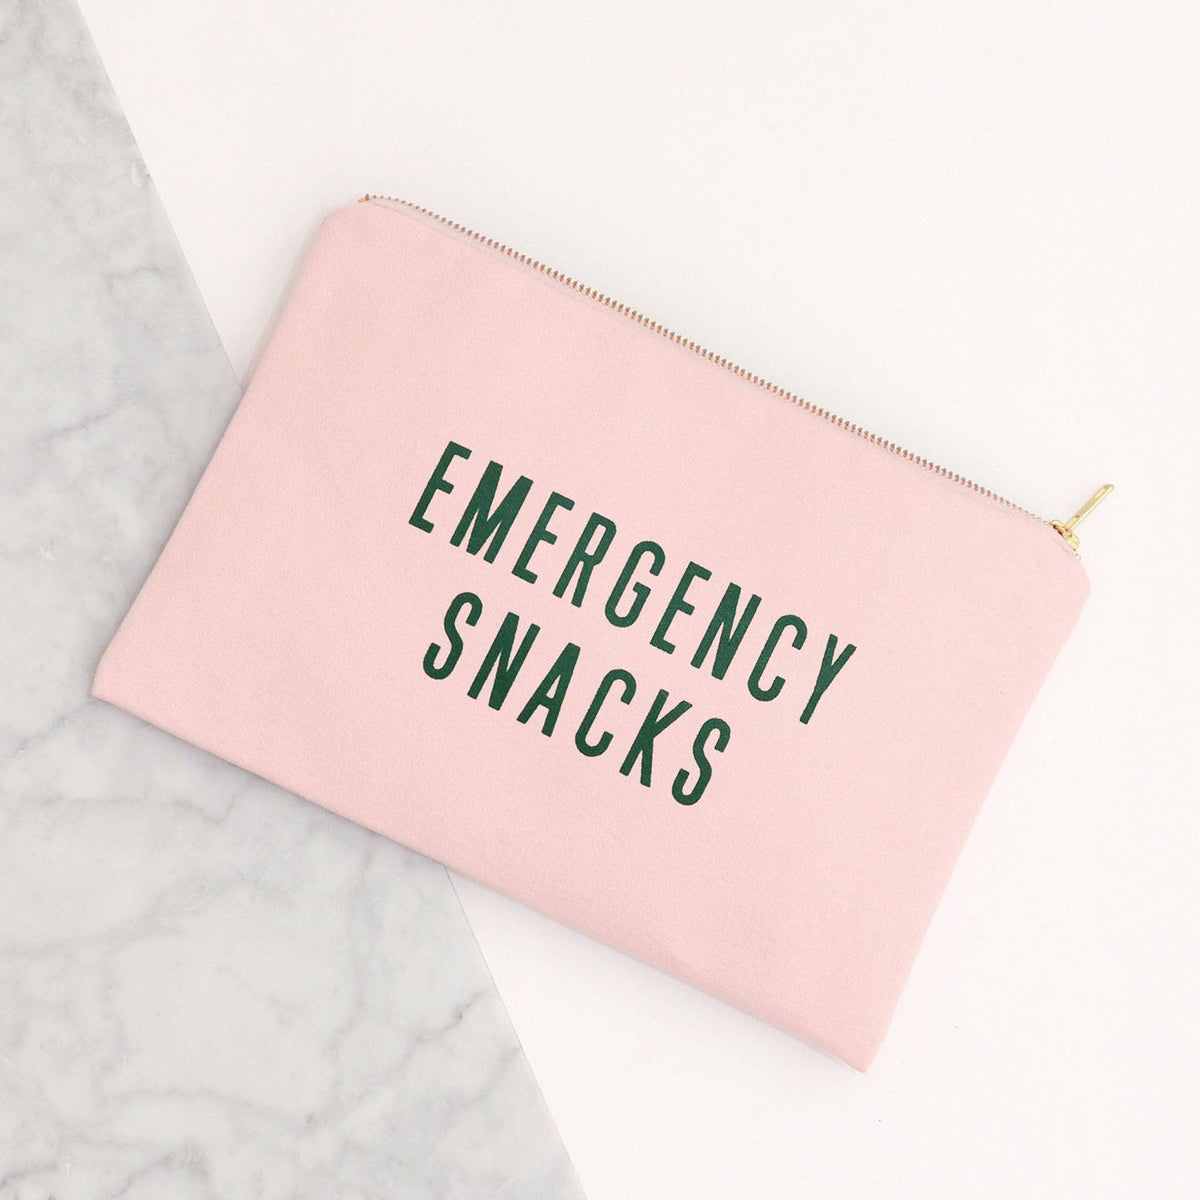 Emergency Snacks - Blush Pink Pouch